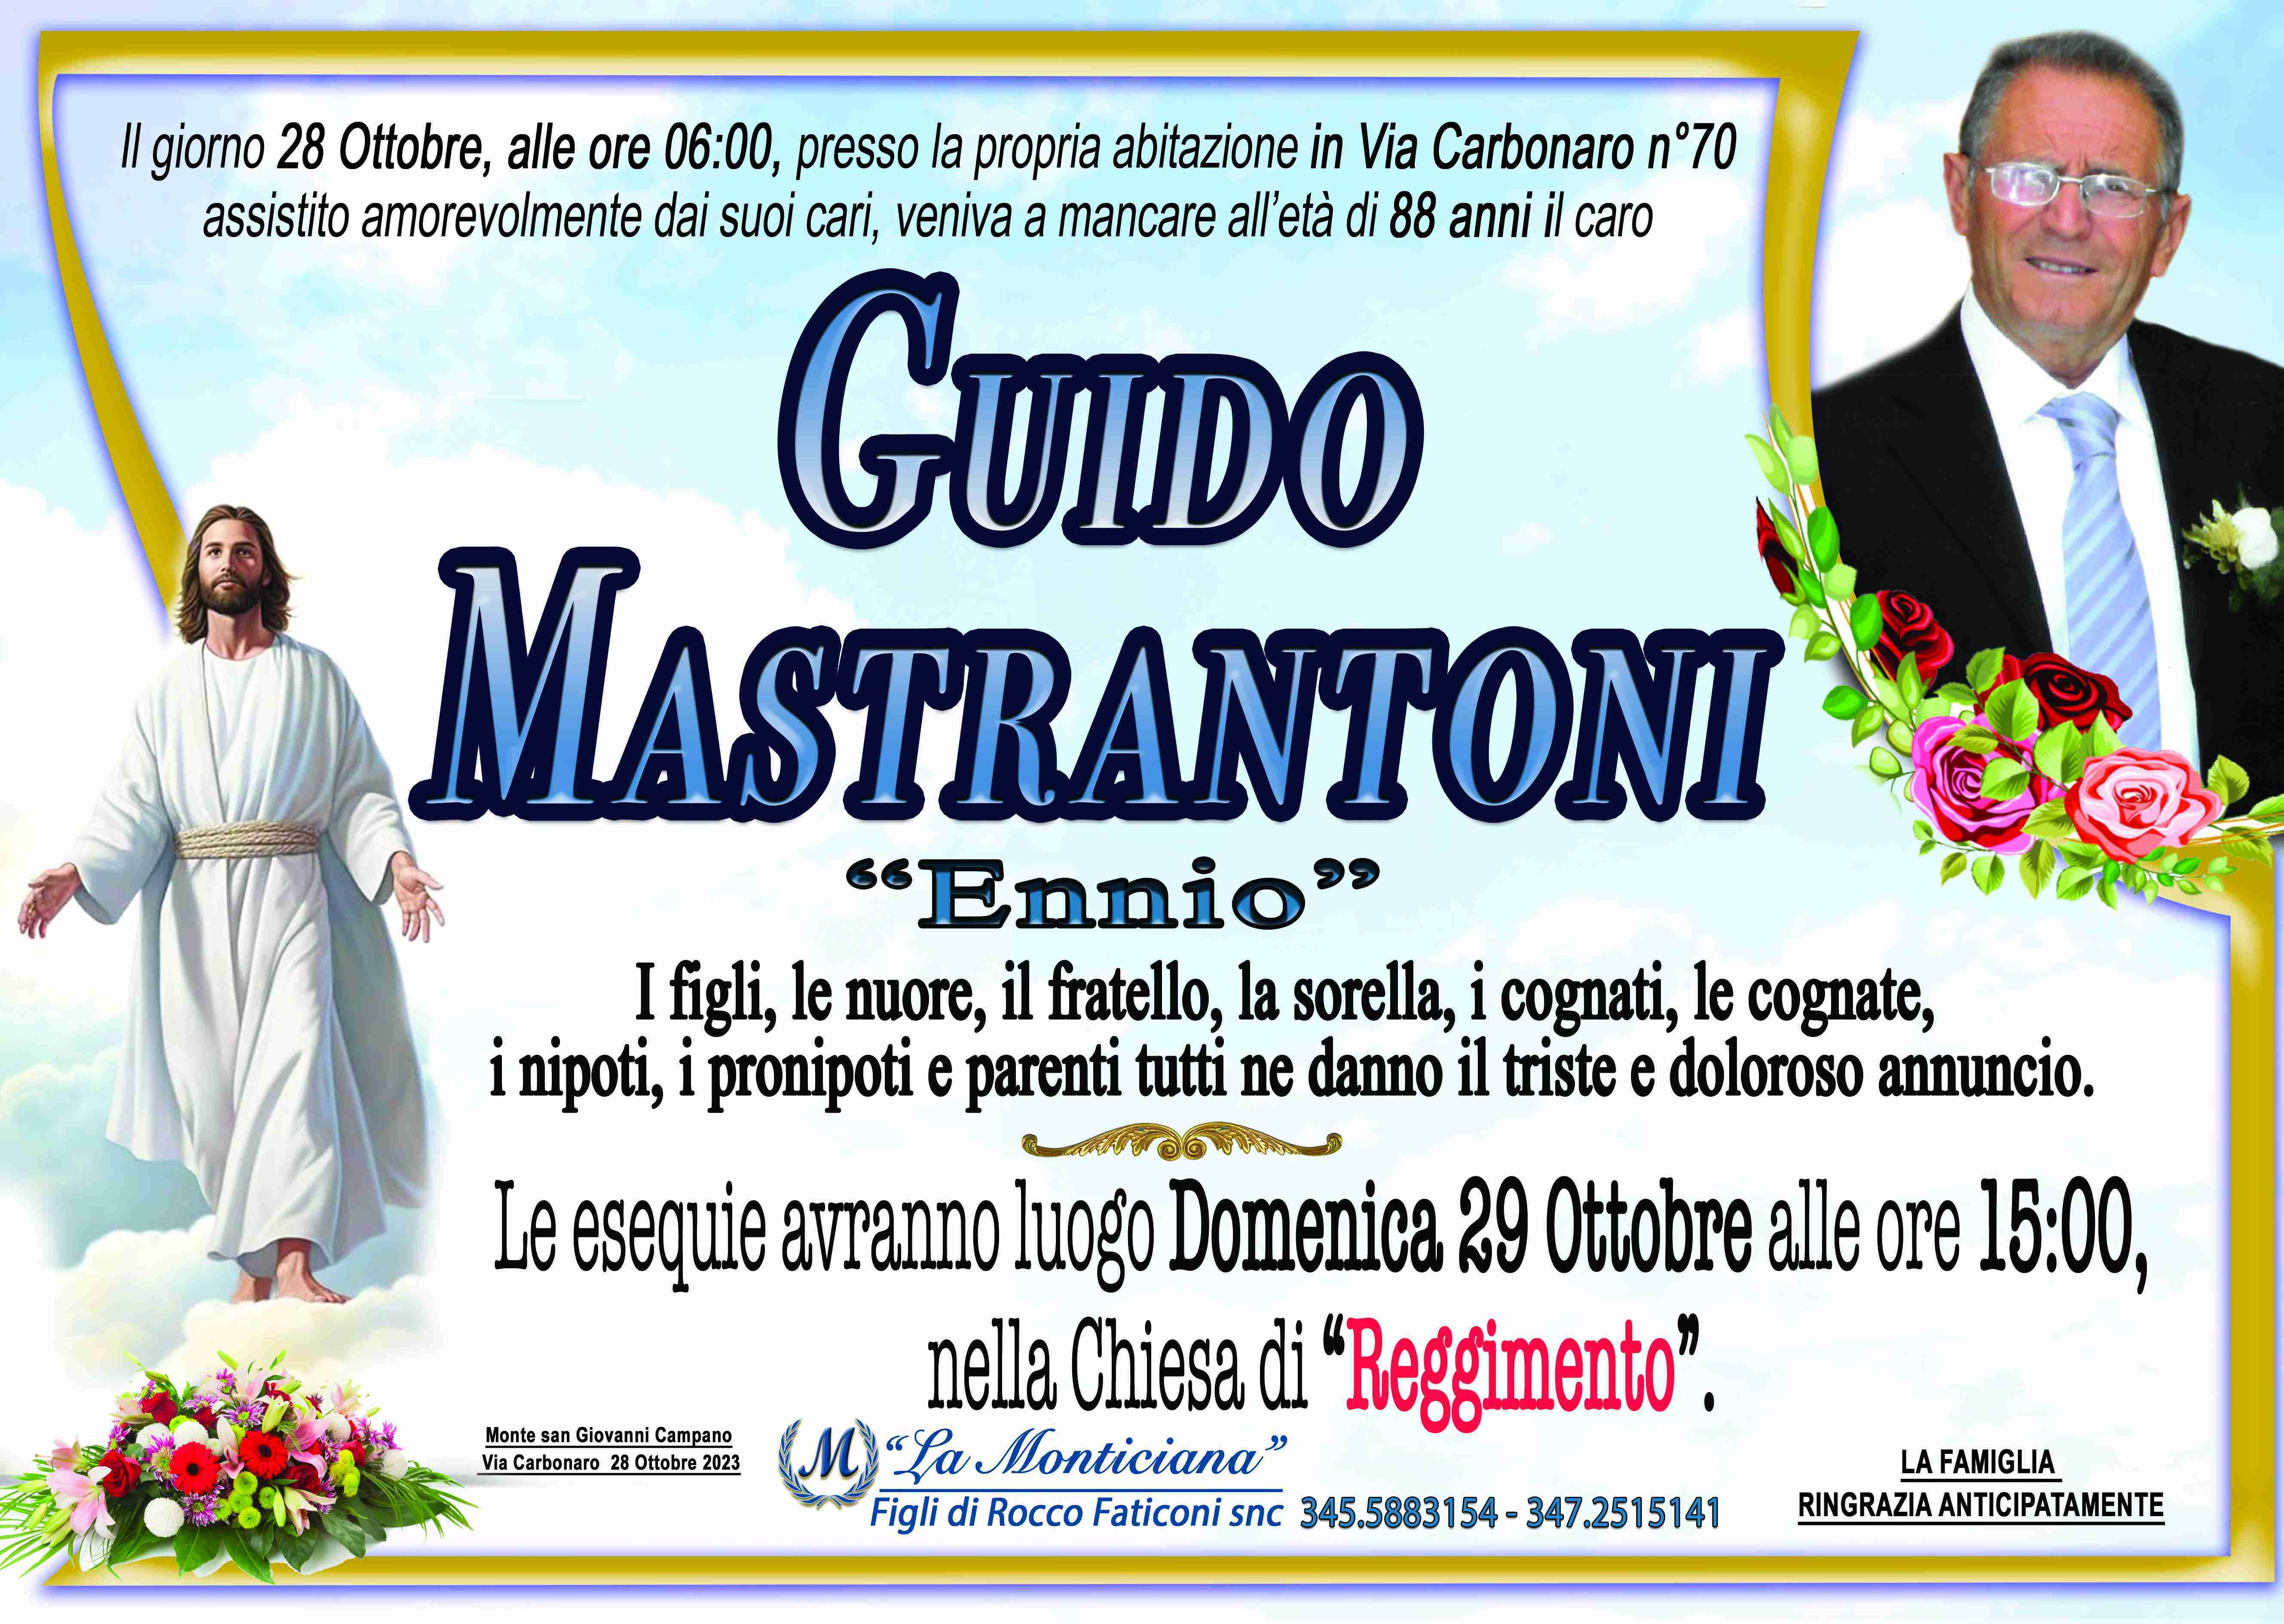 Guido Mastrantoni